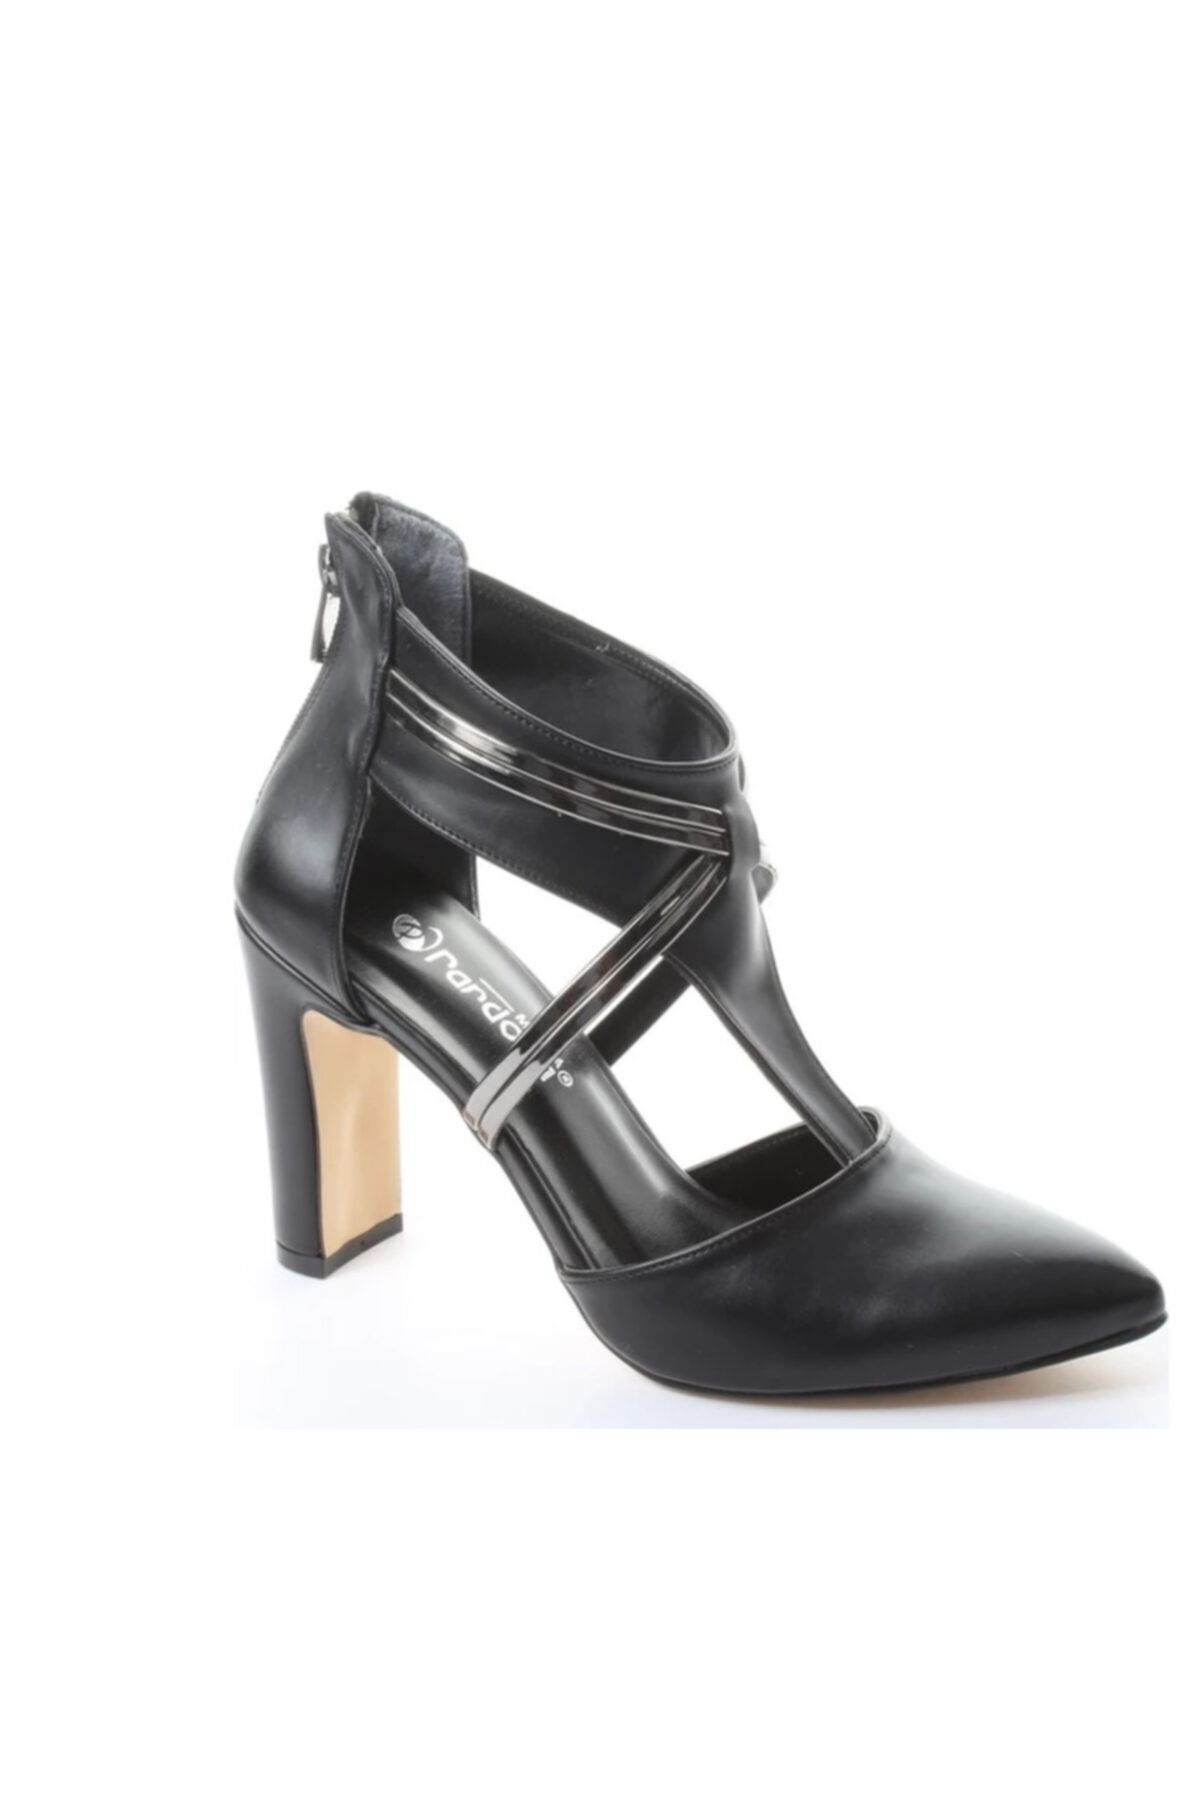 Pandora Kadın Siyah Klasik Topuklu Ayakkabı 302